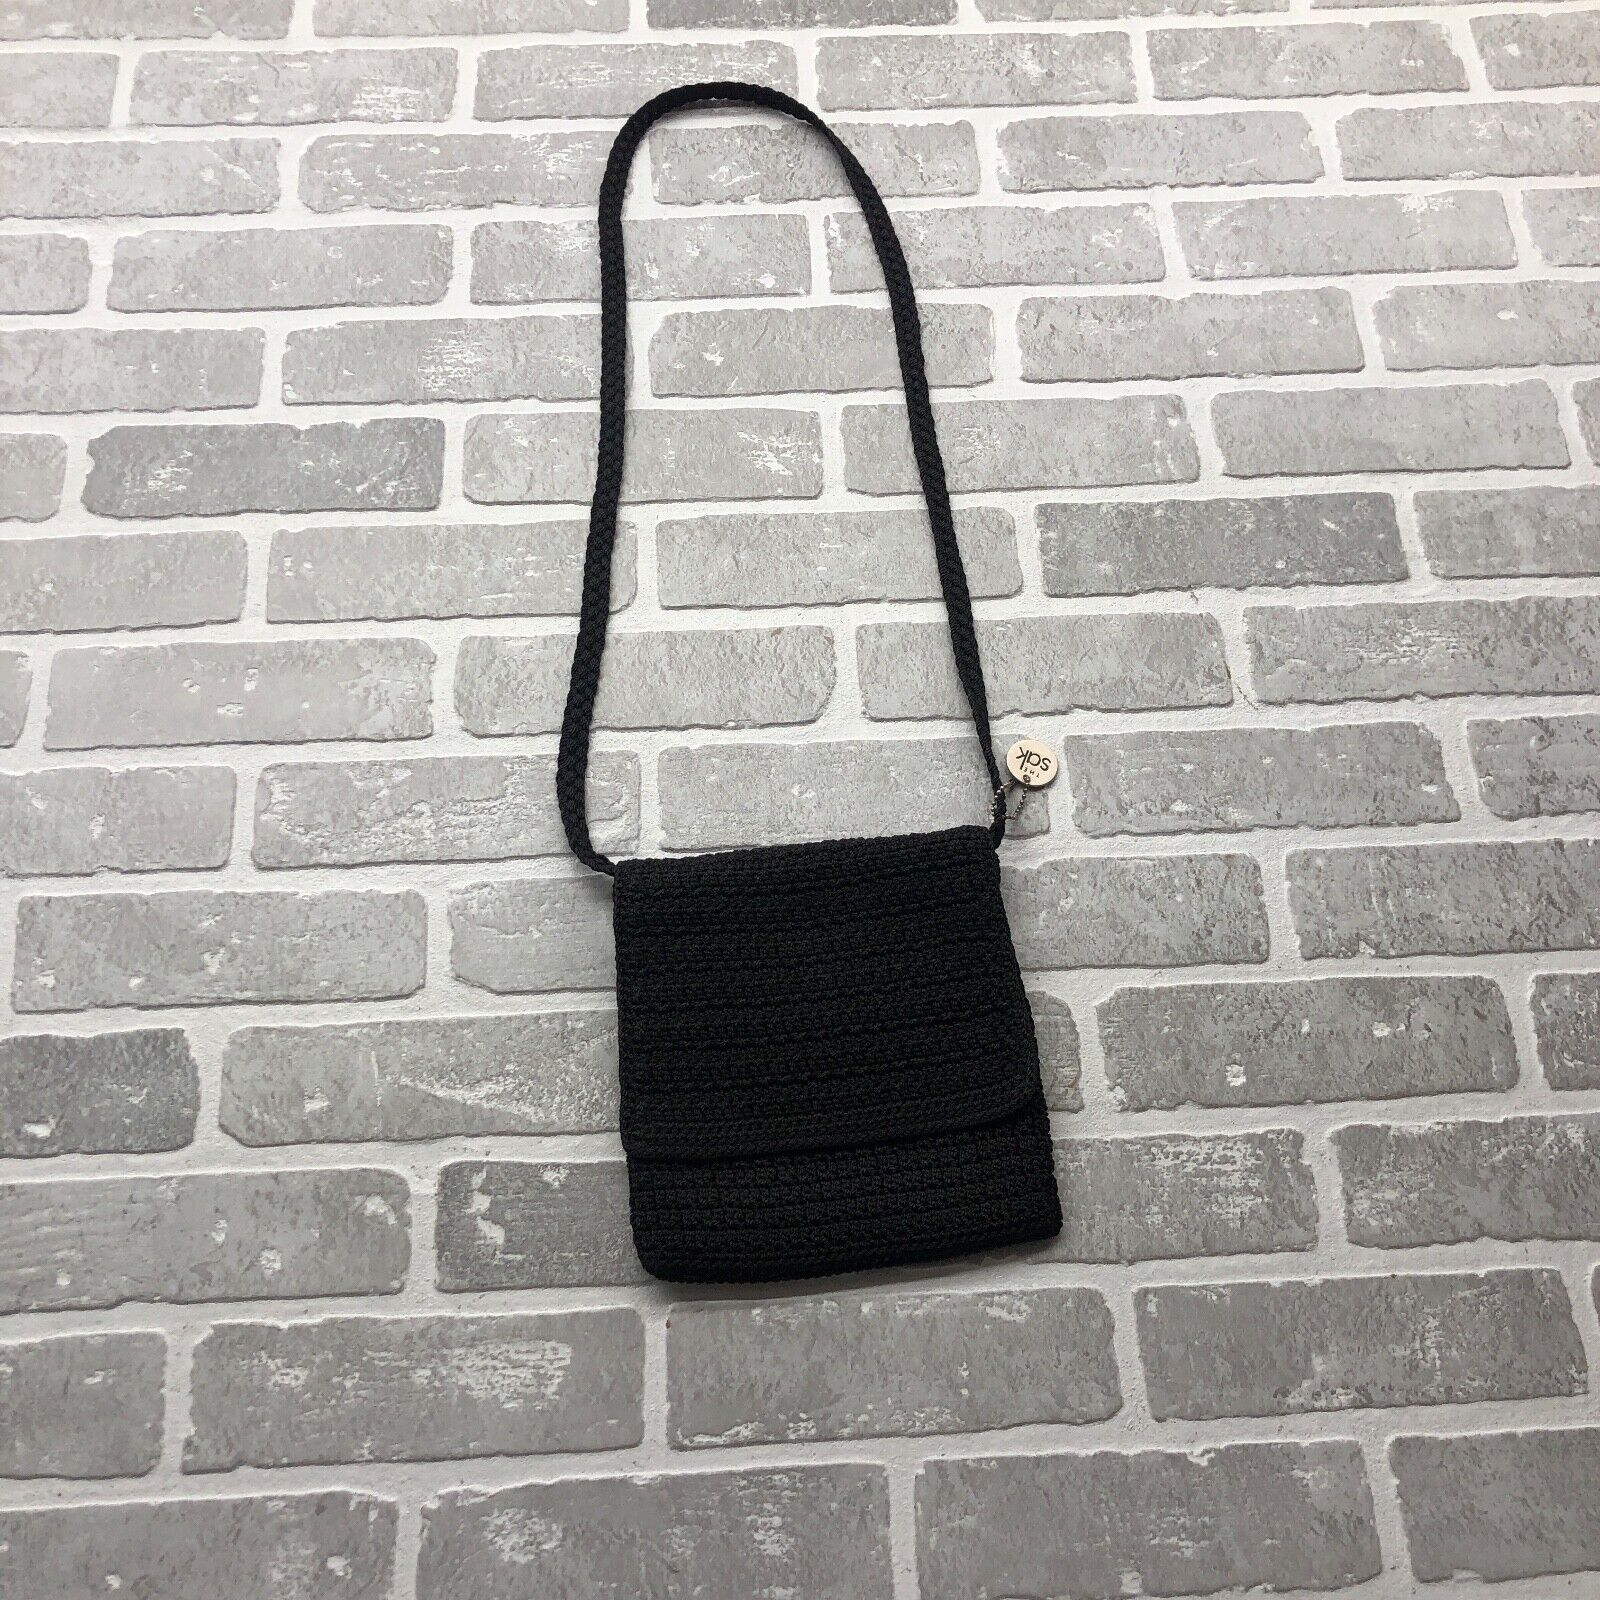 The Sake Black Solid Crochet Long Shoulder Bag Women's Size Rectangle Small